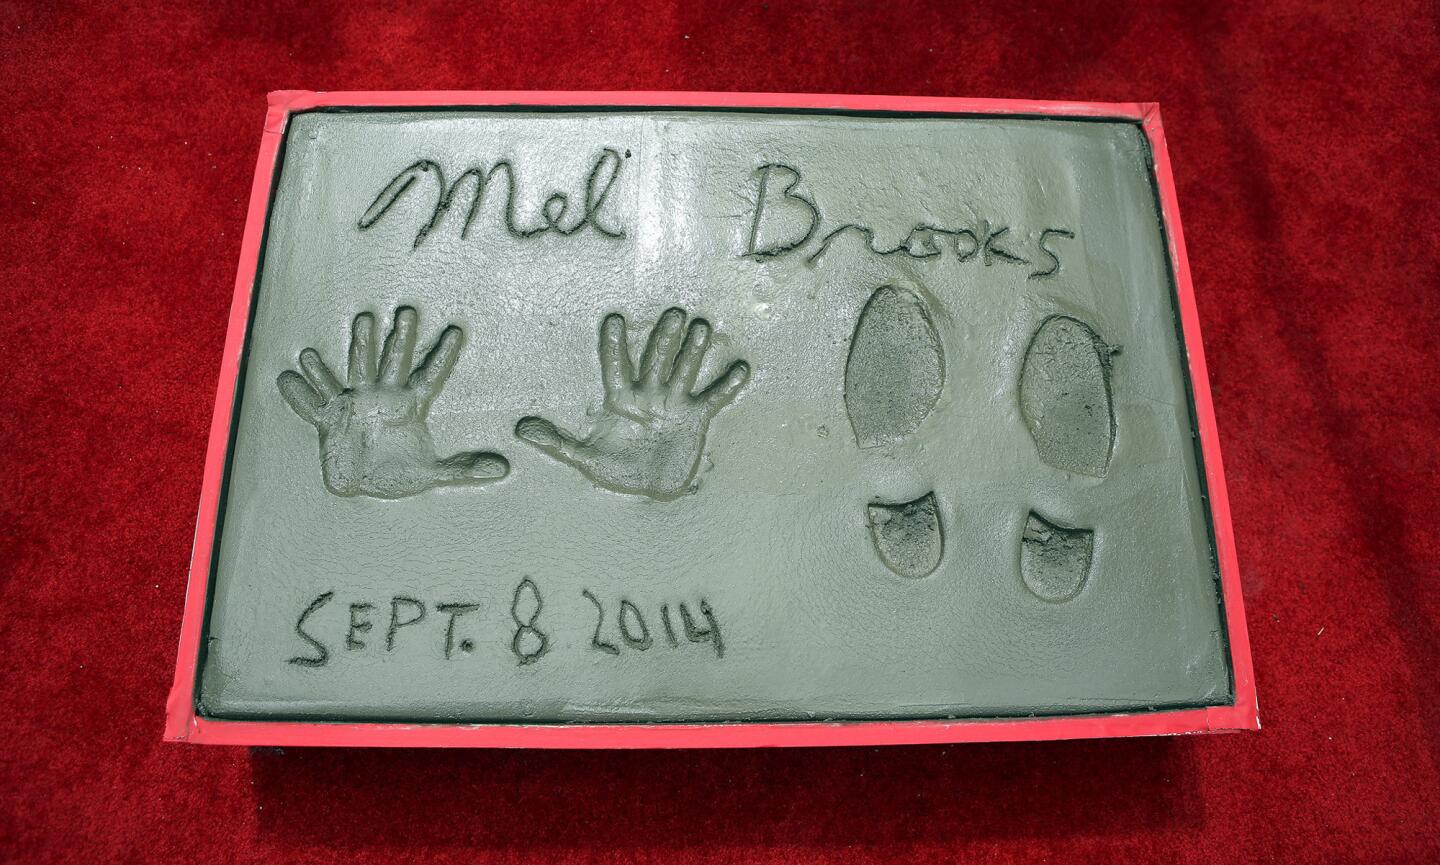 Mel Brooks honored